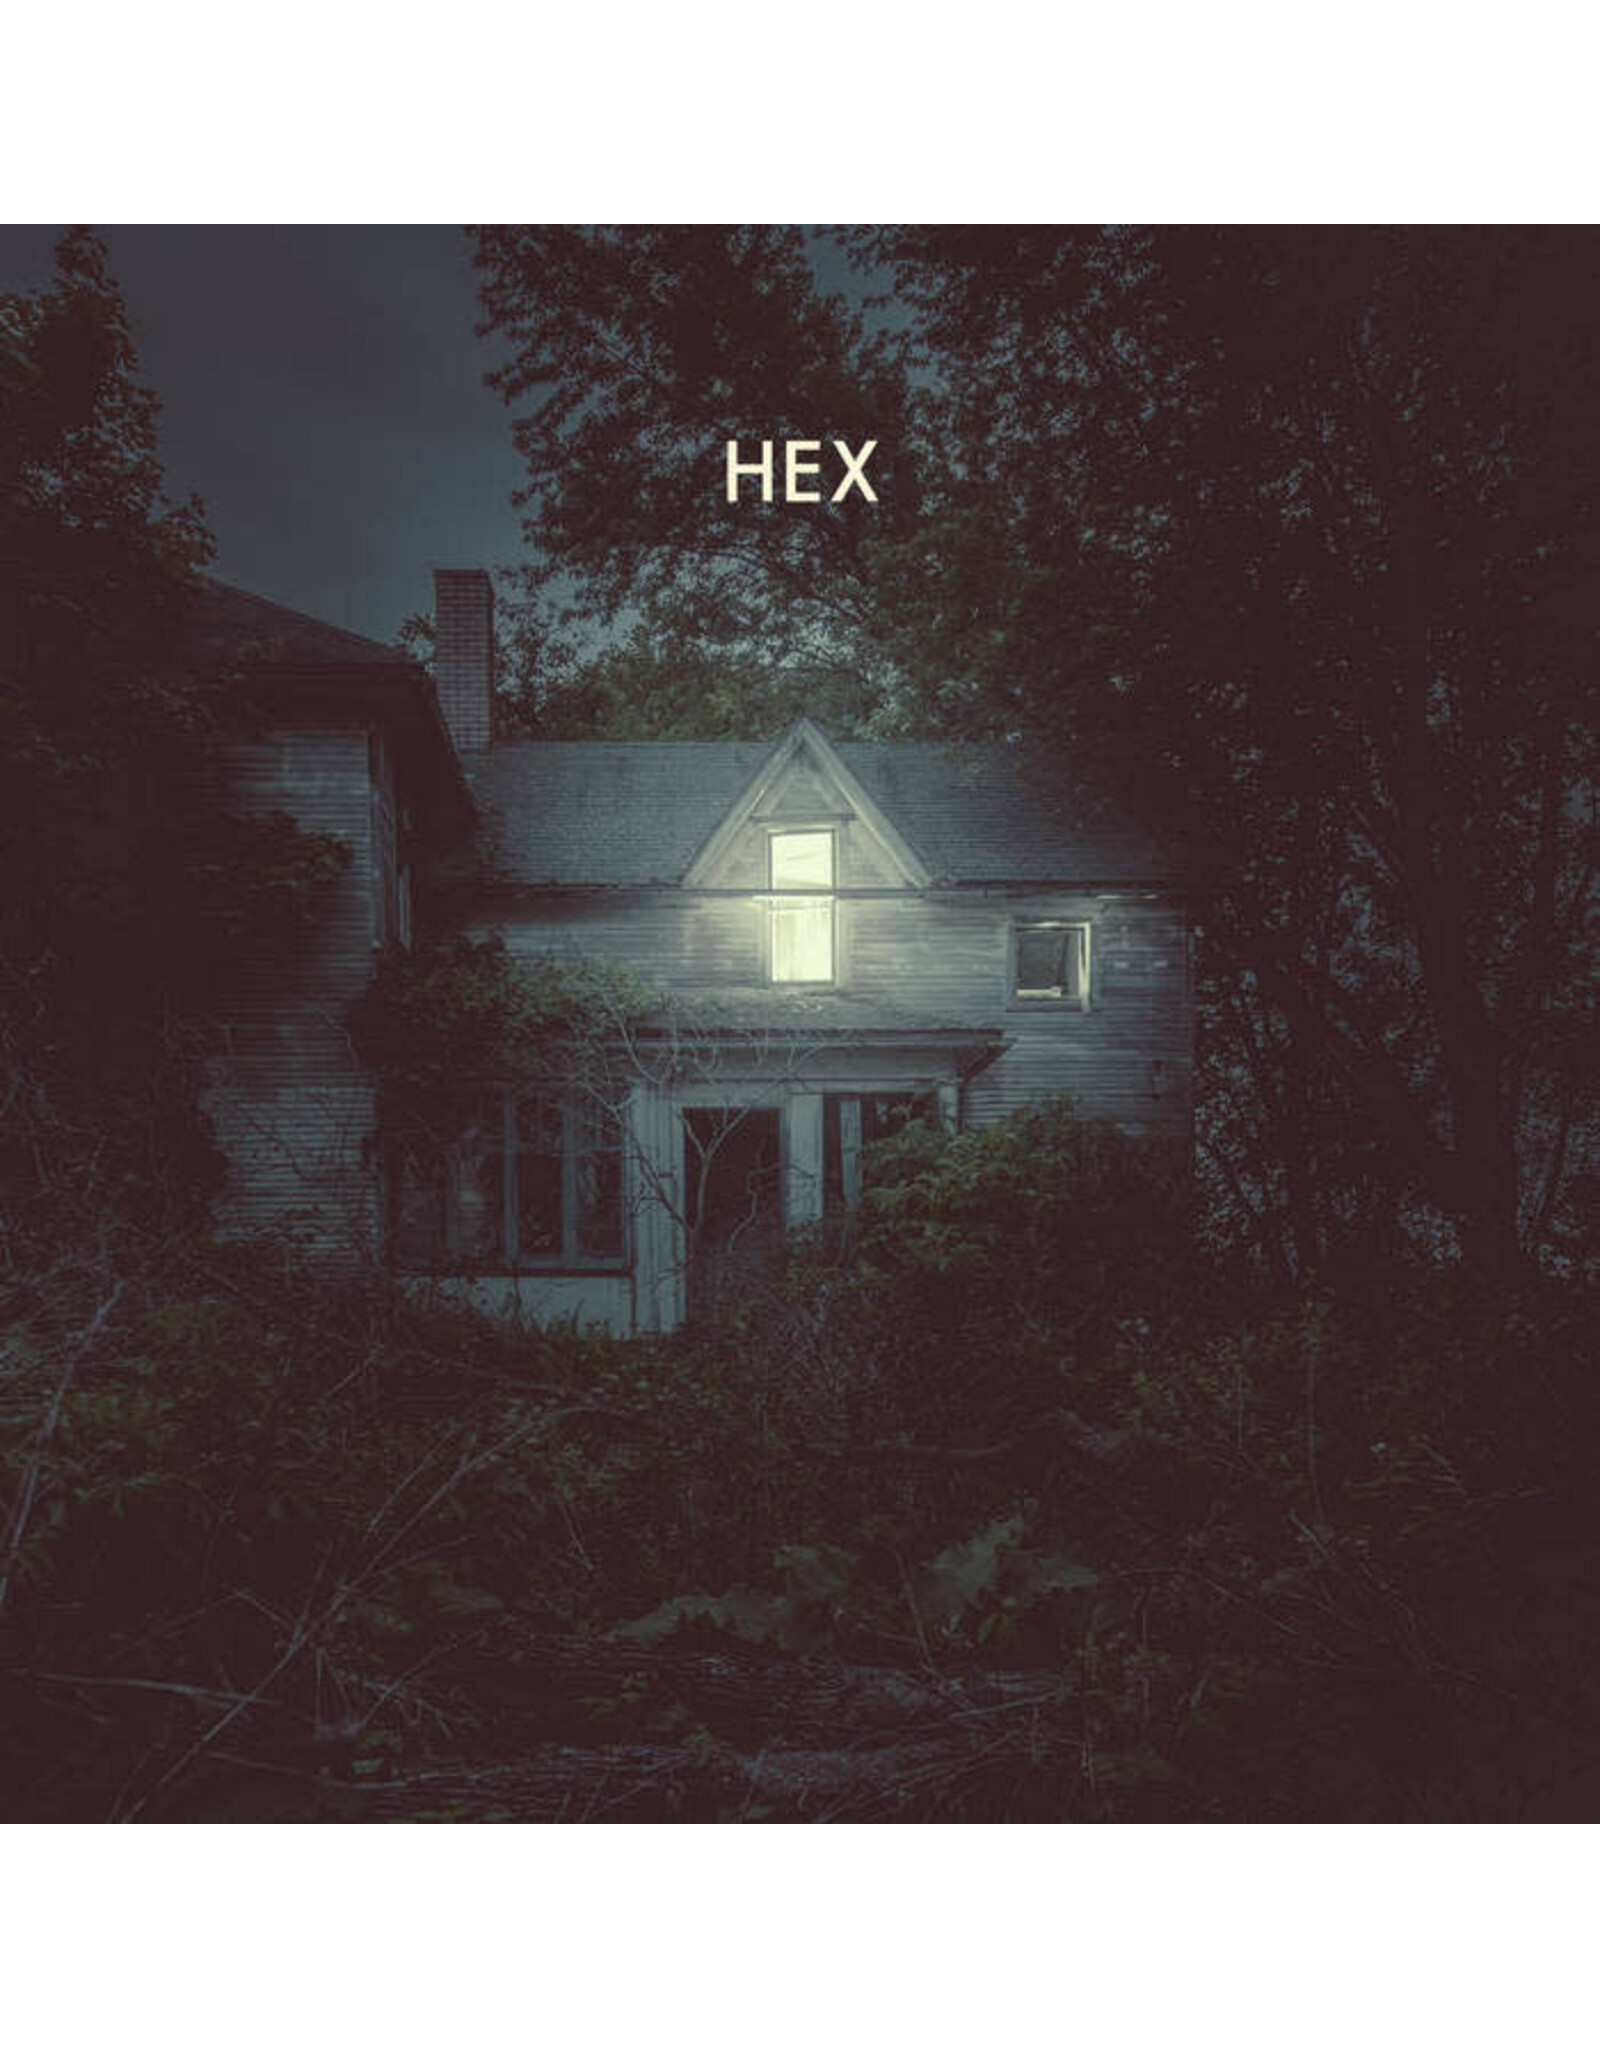 Black Cross Hotel / Hex